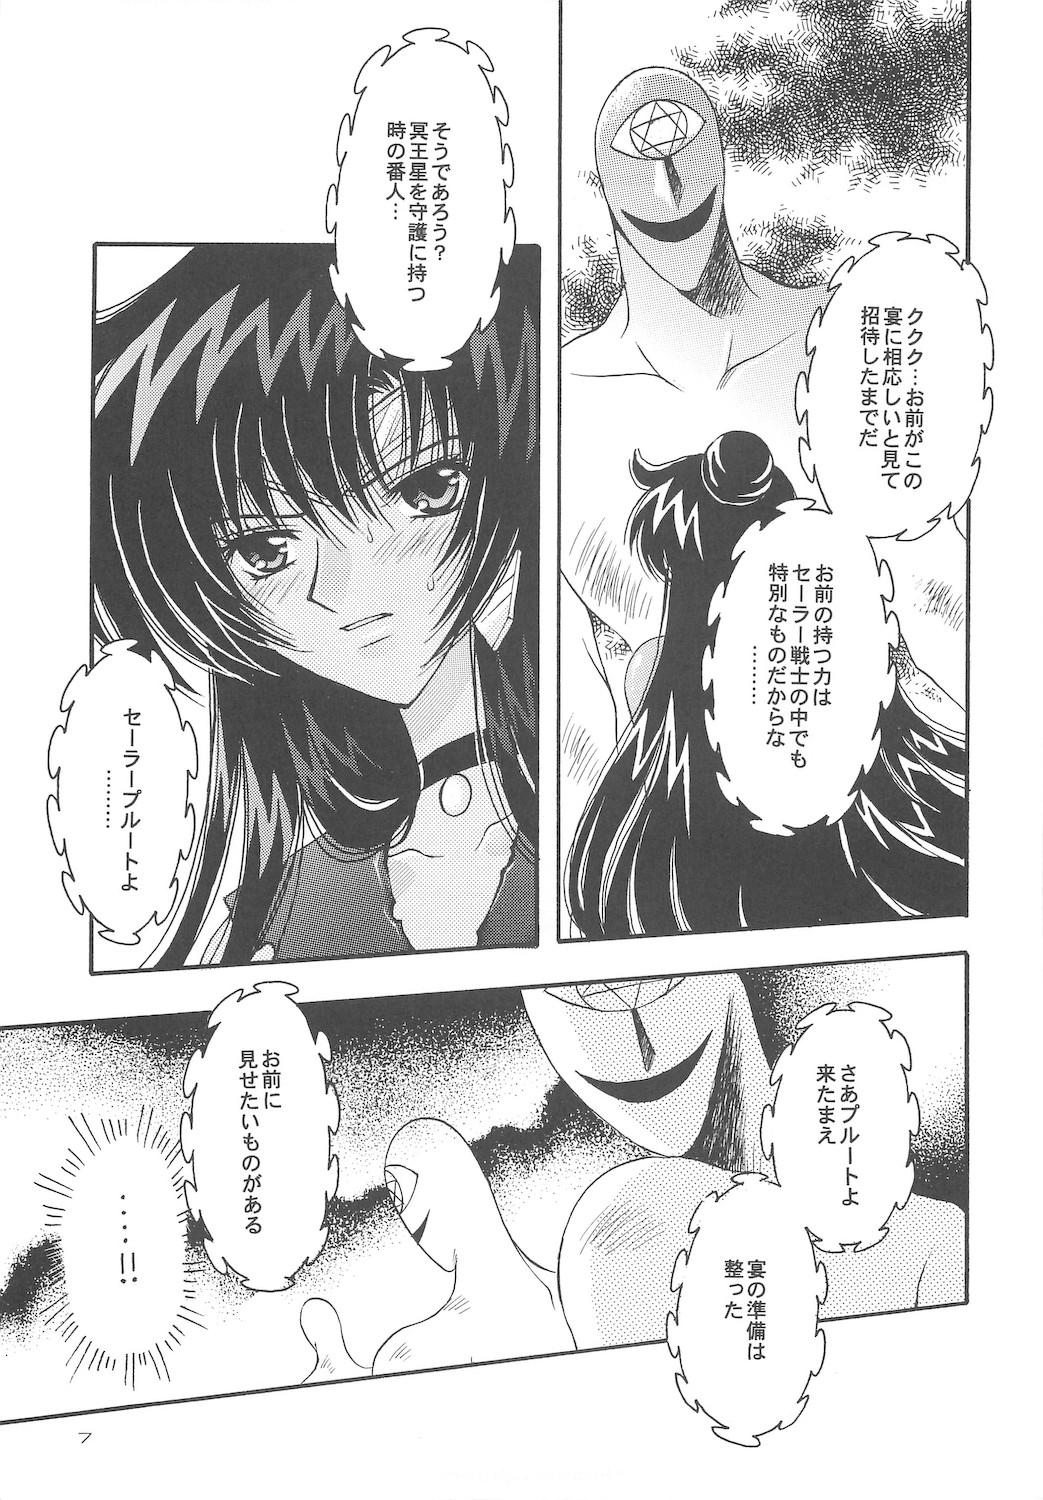 Pov Sex Owaru Sekai dai 4 shou - Sailor moon Load - Page 7